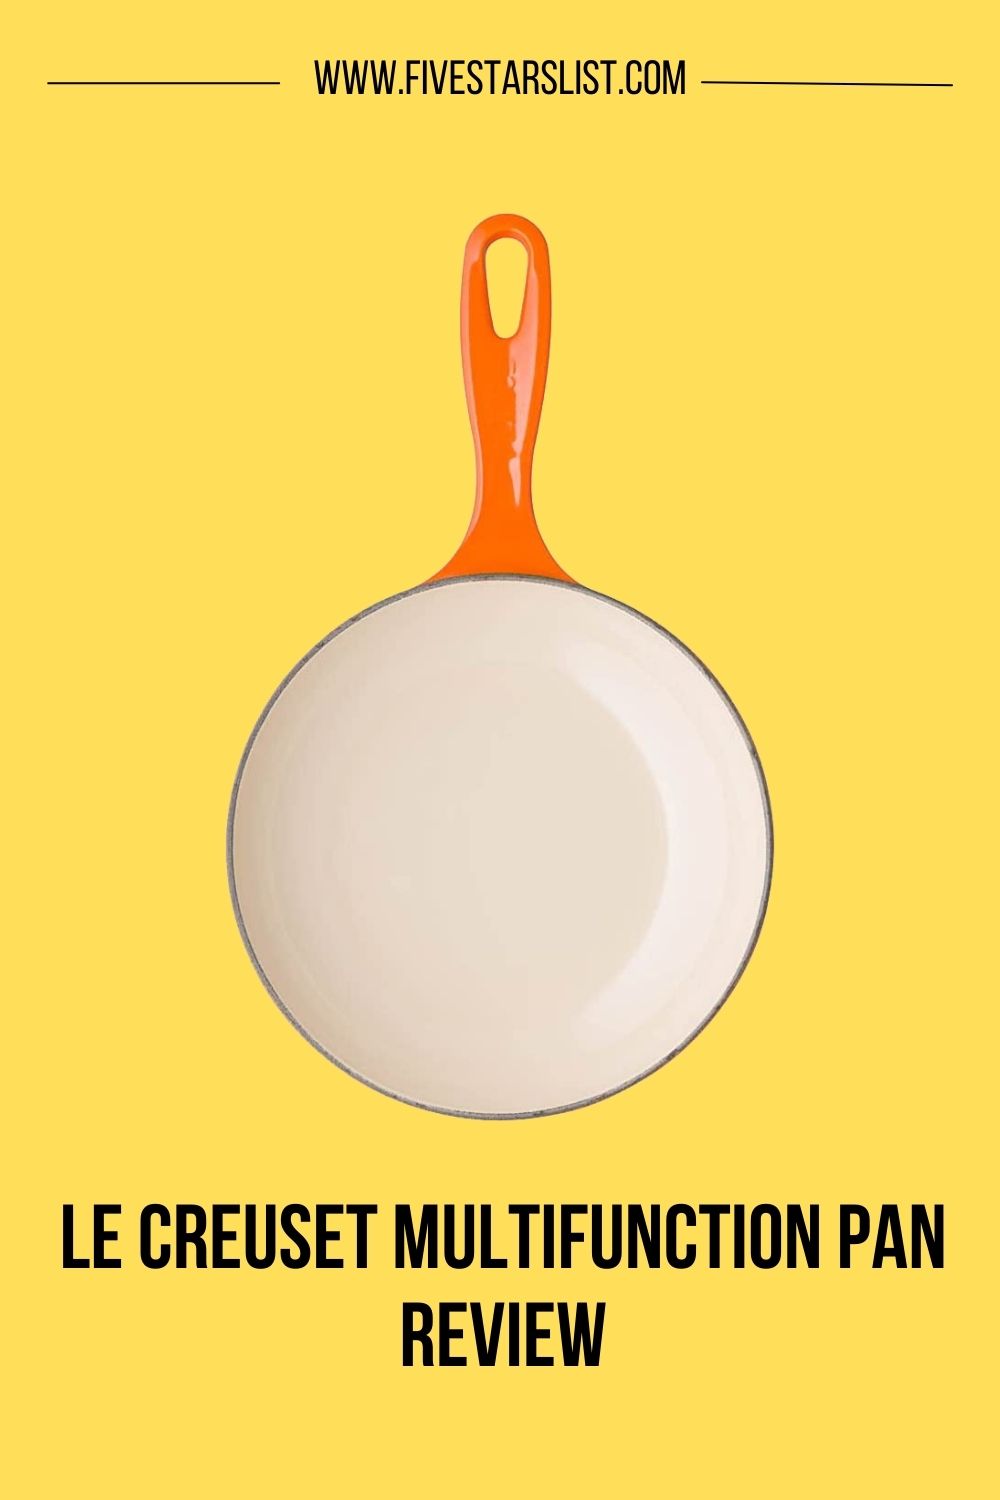 Le Creuset Multifunction Pan Review